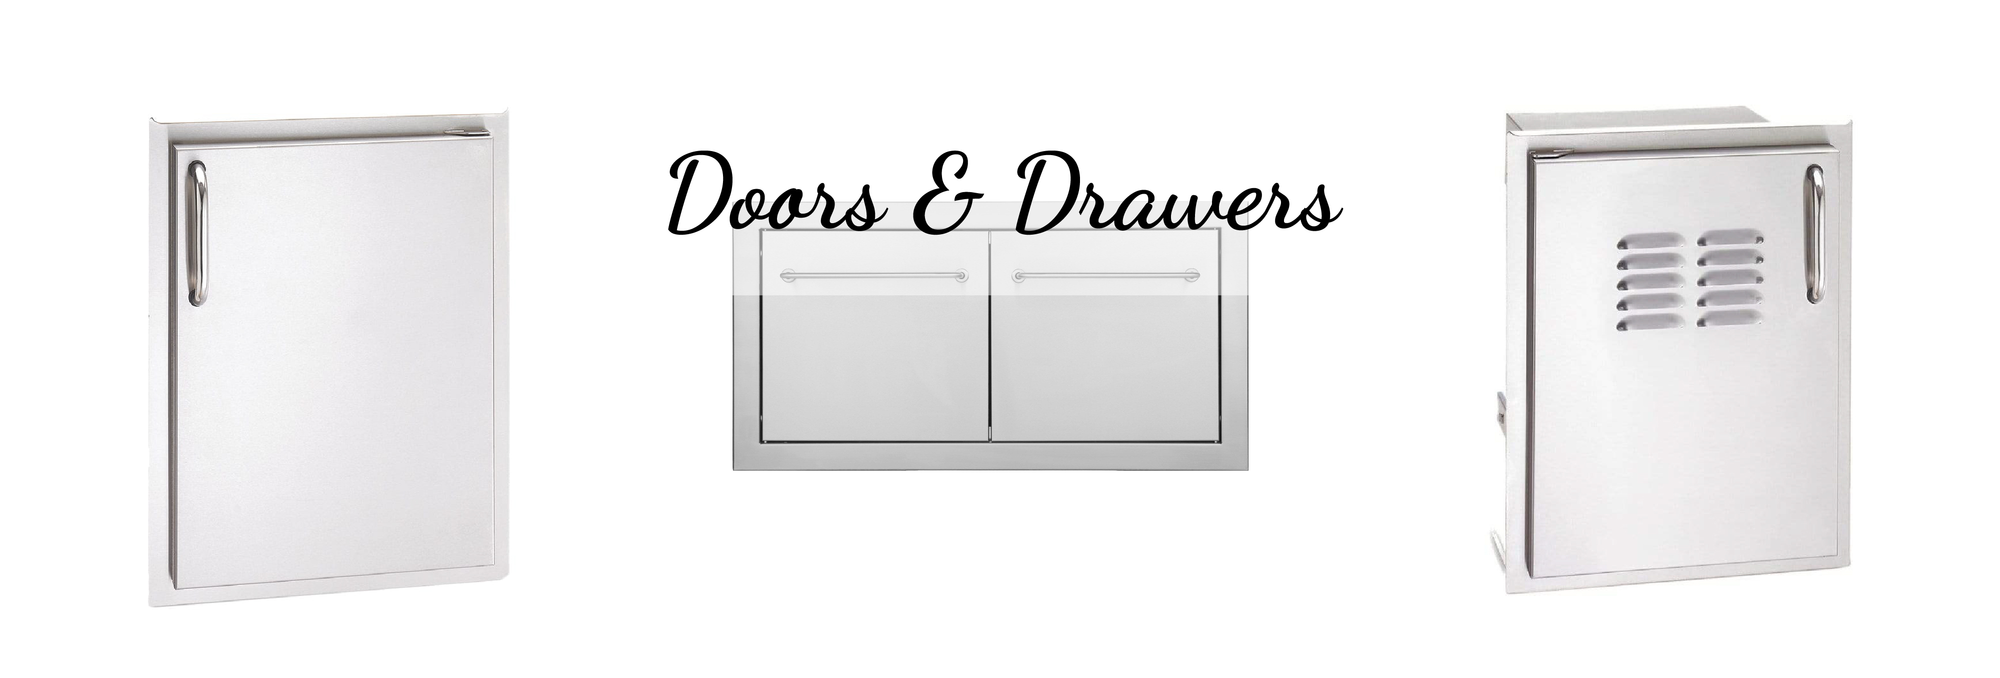 Doors & Drawers